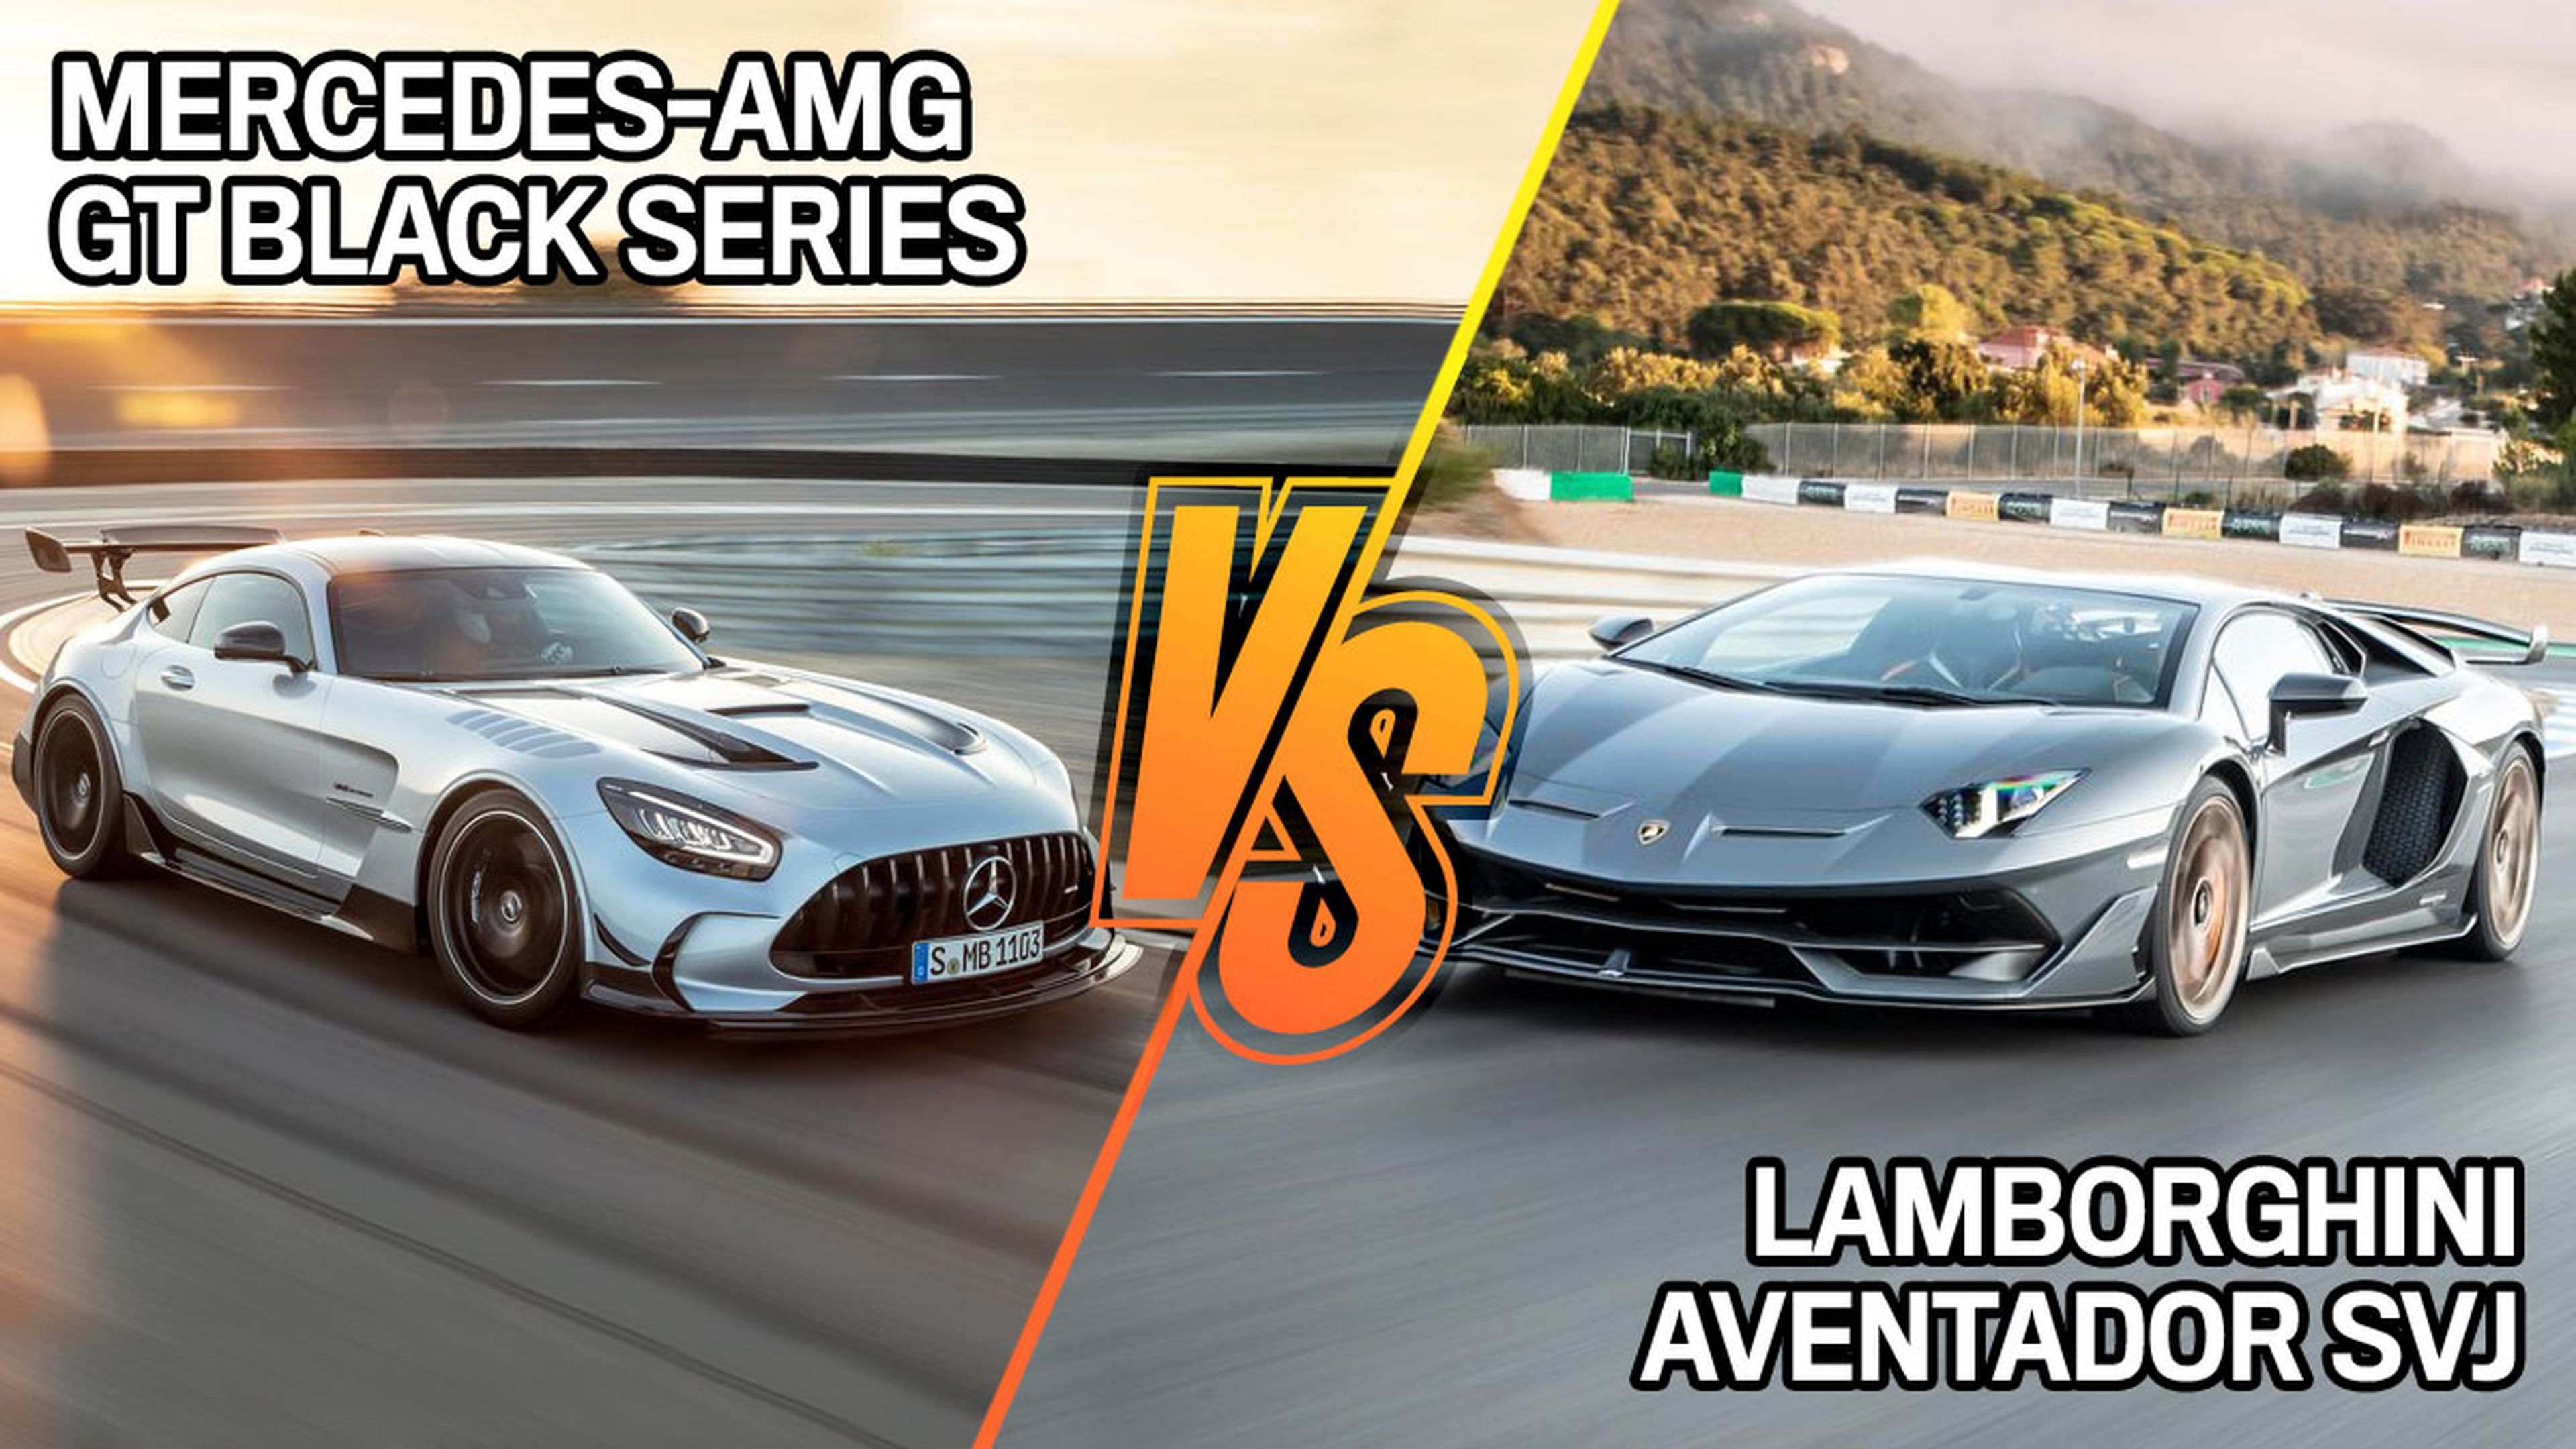 Lamborghini Aventador SVJ vs Mercedes-AMG GT Black Series